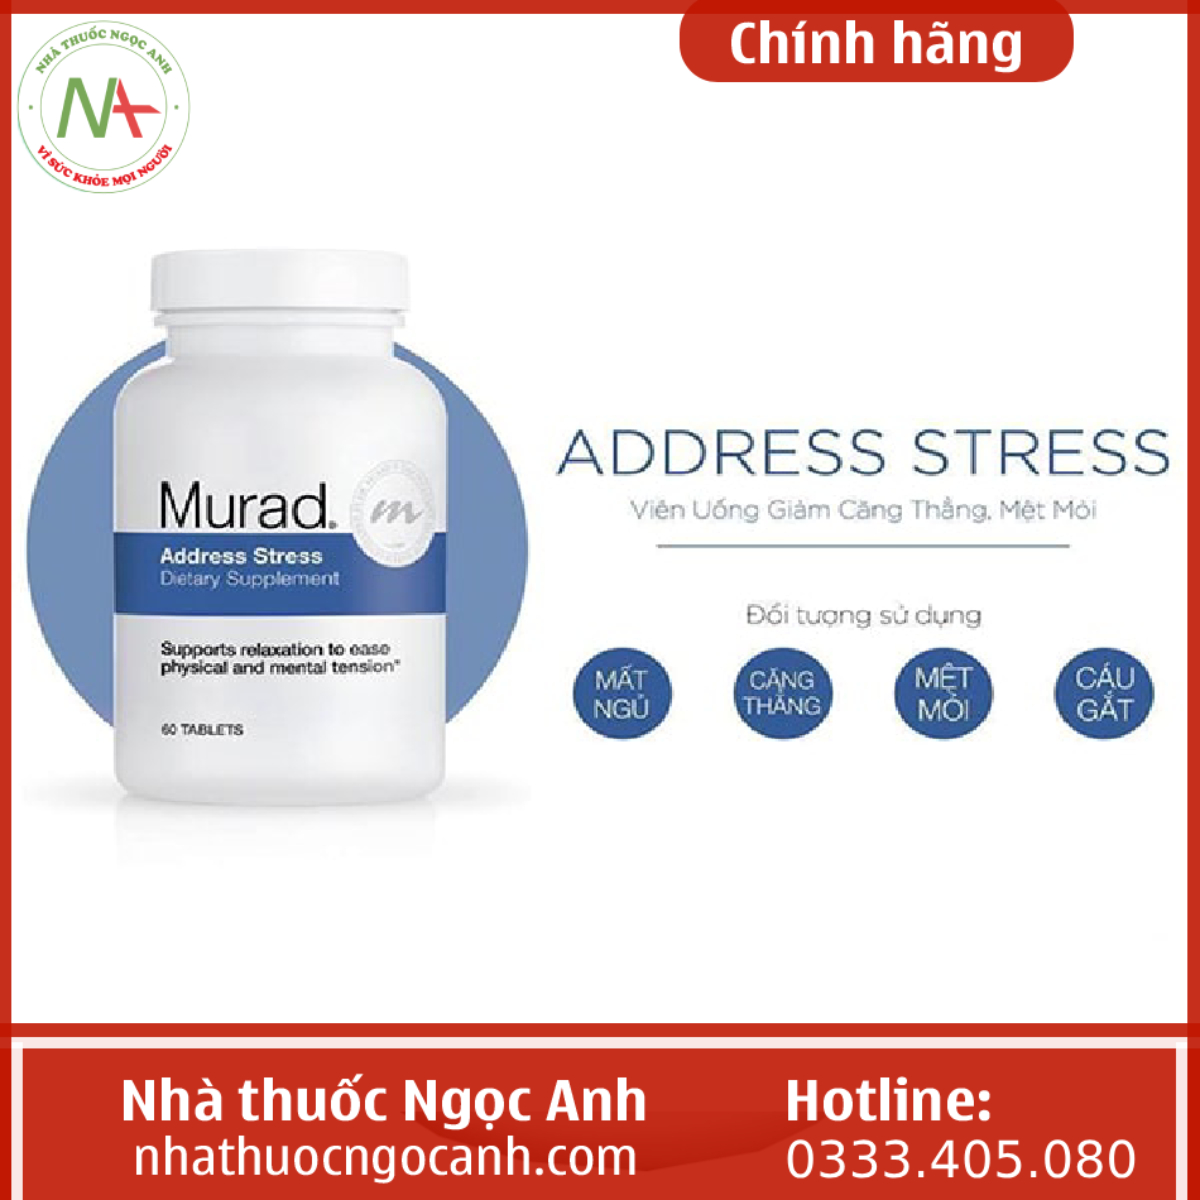 Address Stress Murad